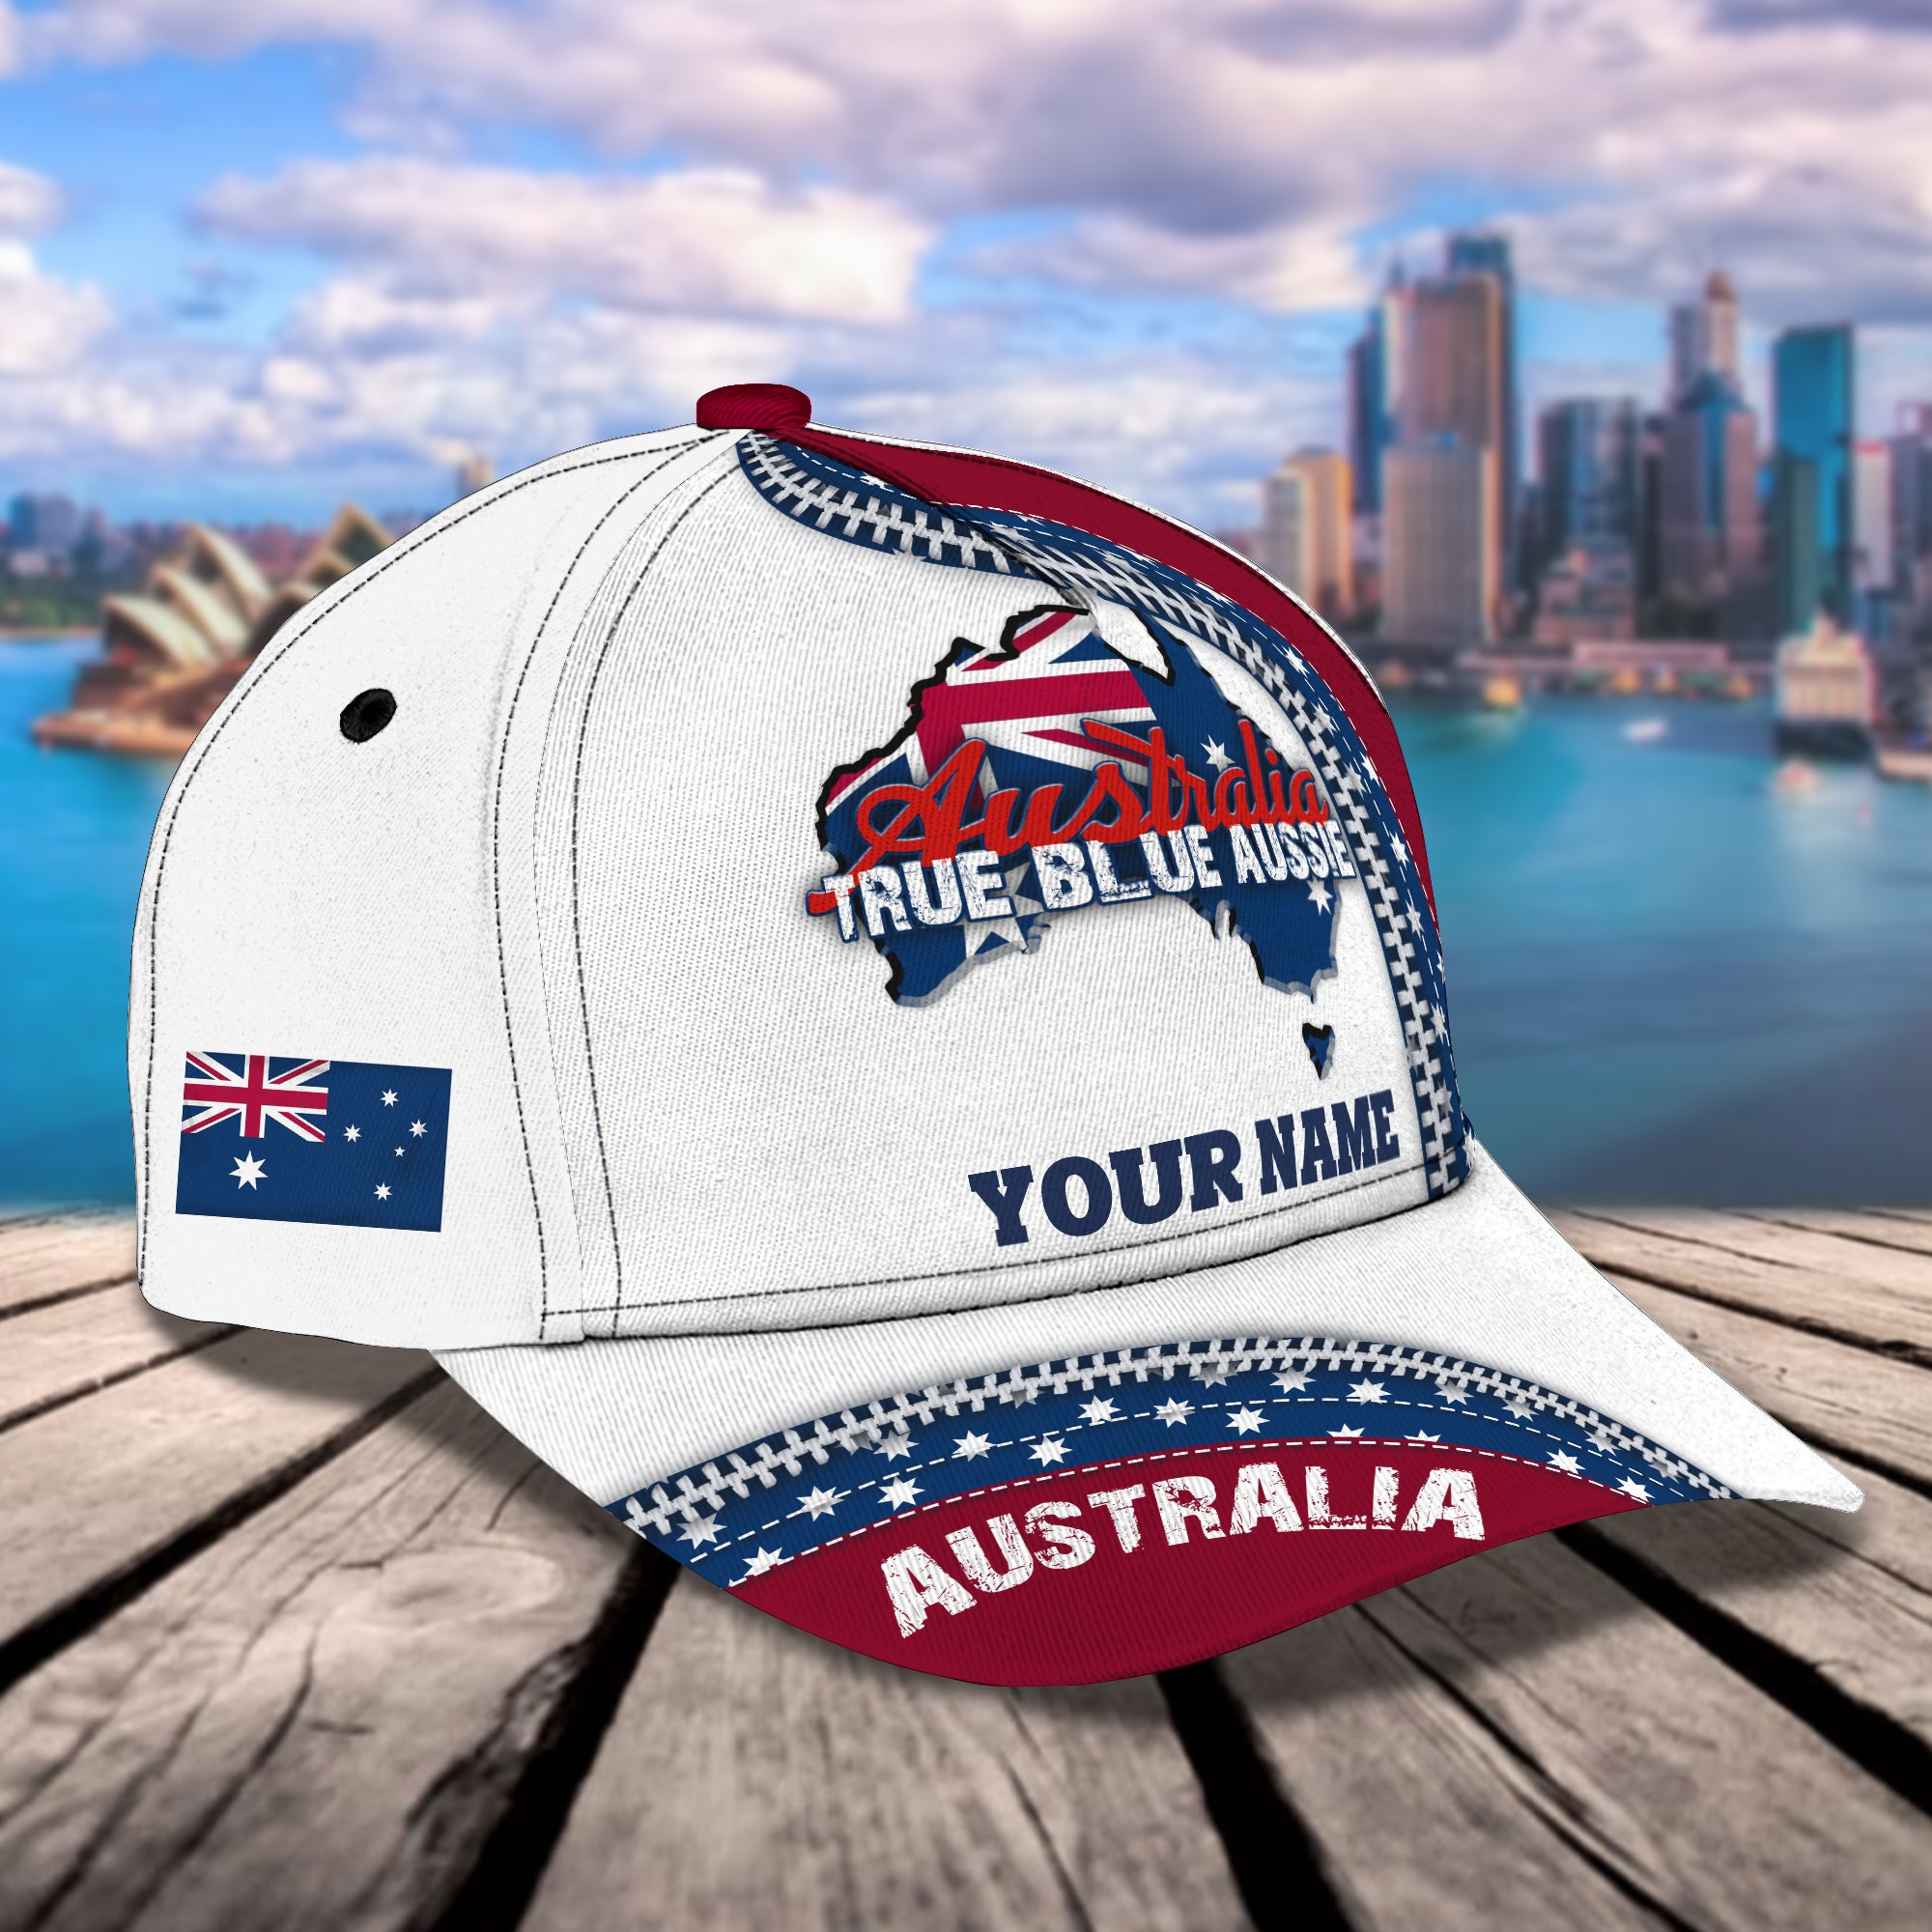 Australia True Blue Aussie - Personalized Name Cap 53 - Tad